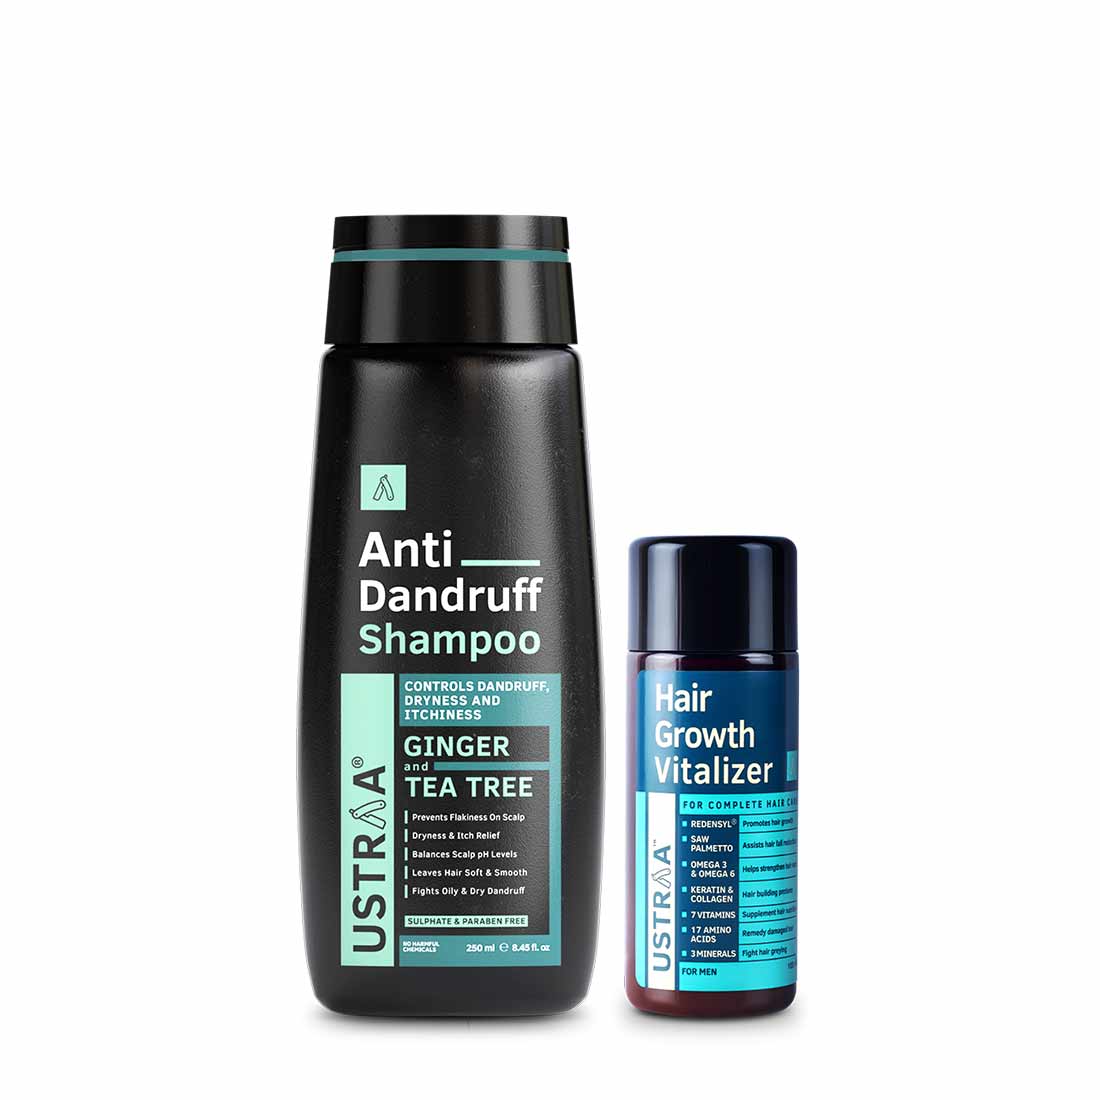 Ustraa Anti Dandruff Hair Care Solution for Men with Hair Growth Vitalizer (100ml) and Anti-dandruff Shampoo (250ml)